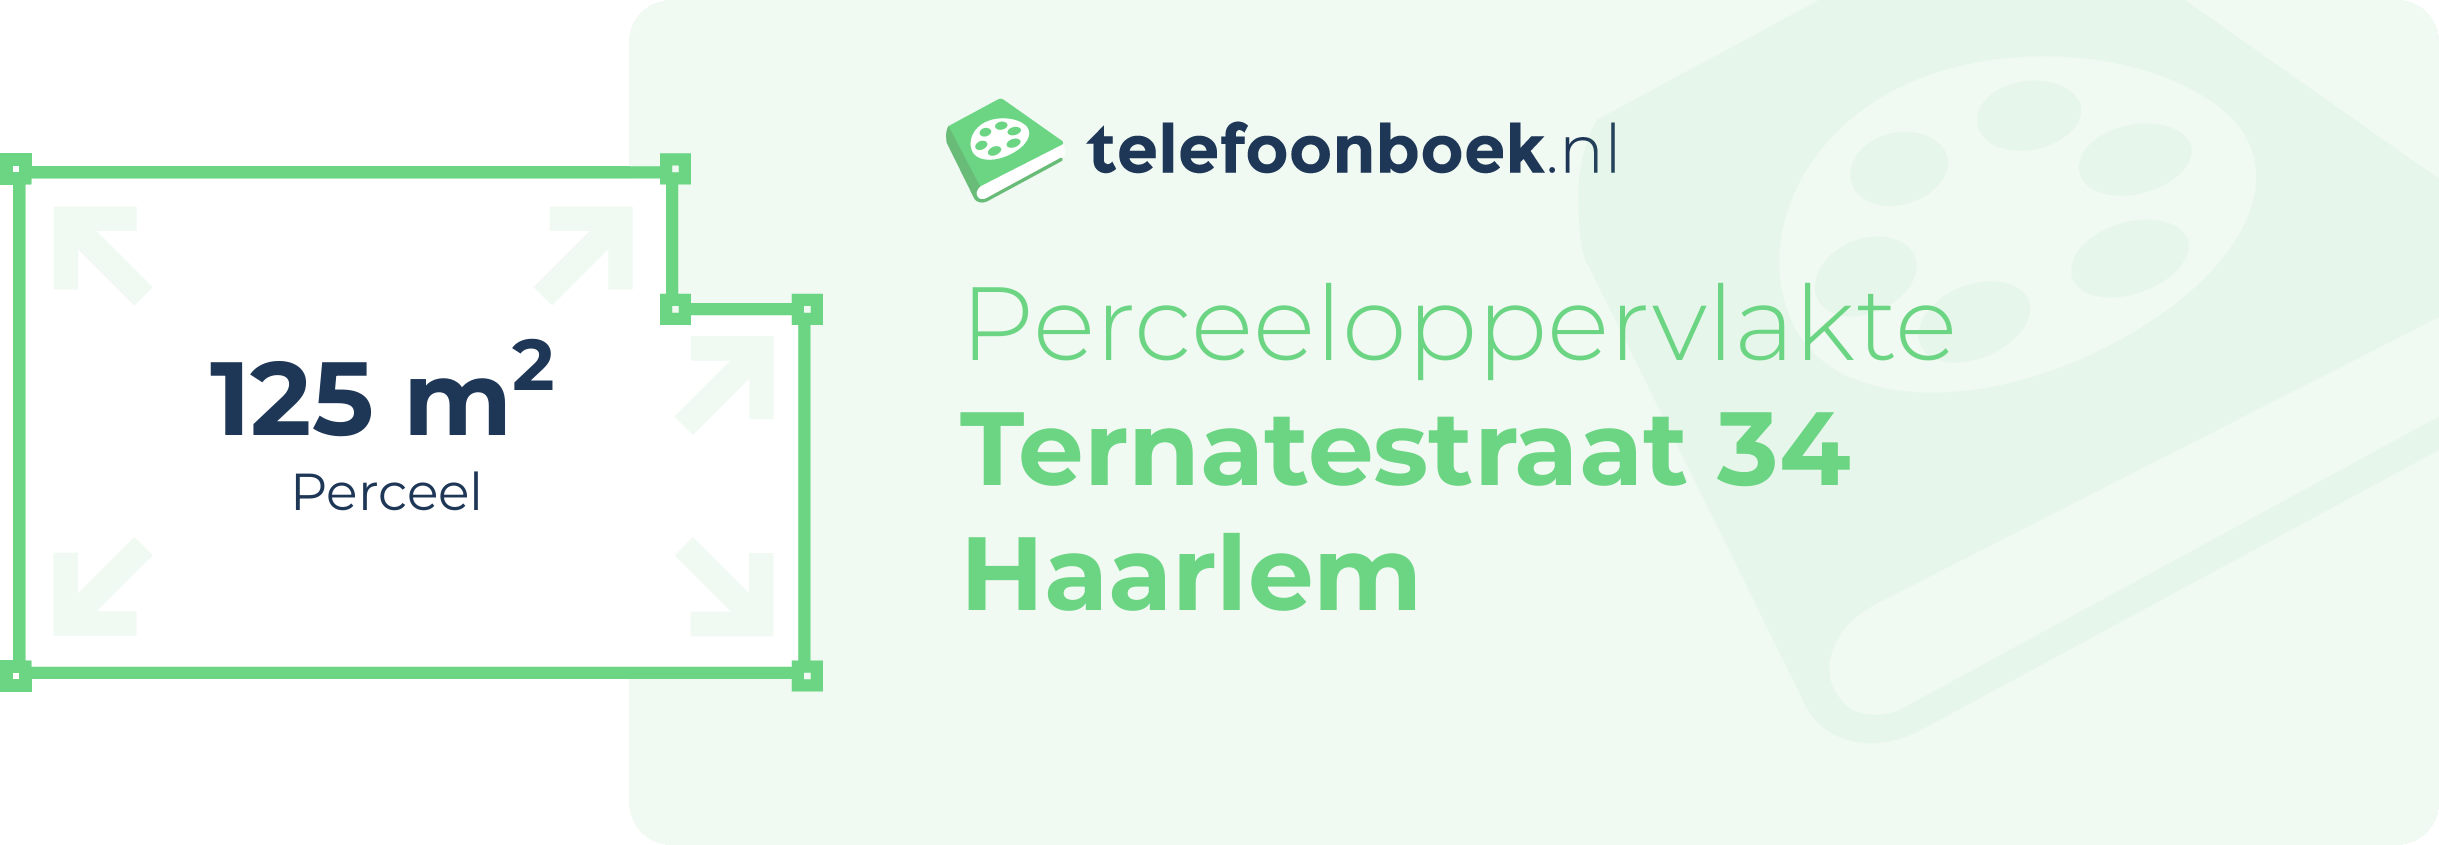 Perceeloppervlakte Ternatestraat 34 Haarlem